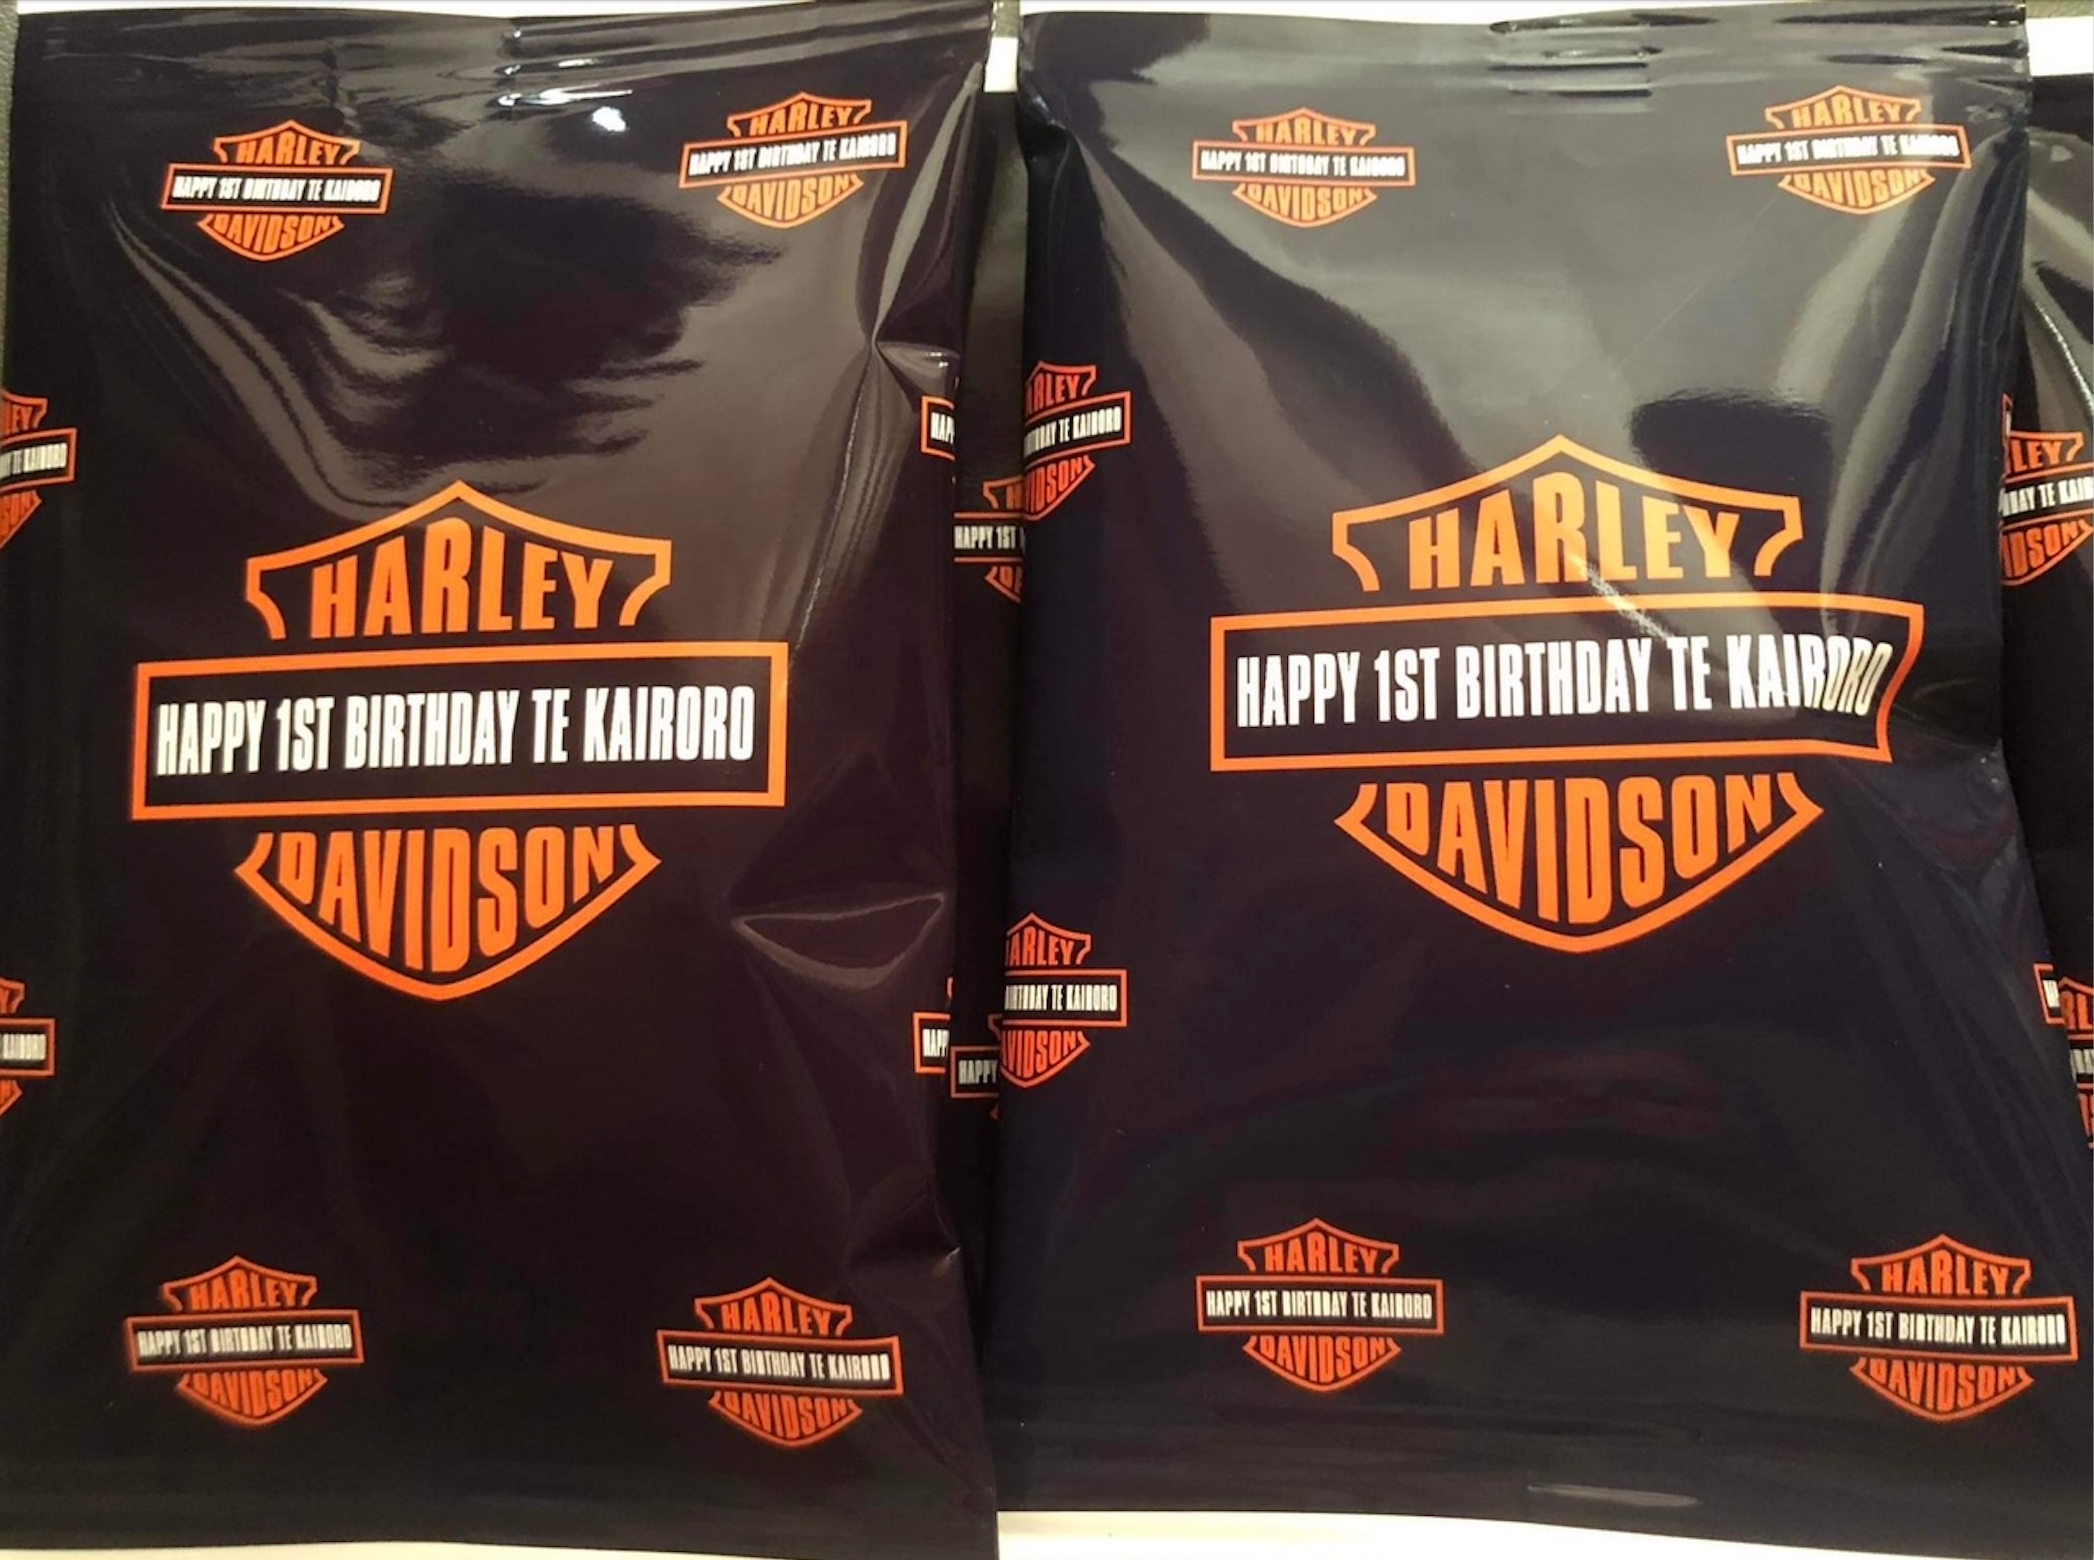 Harley Davidson chip packets